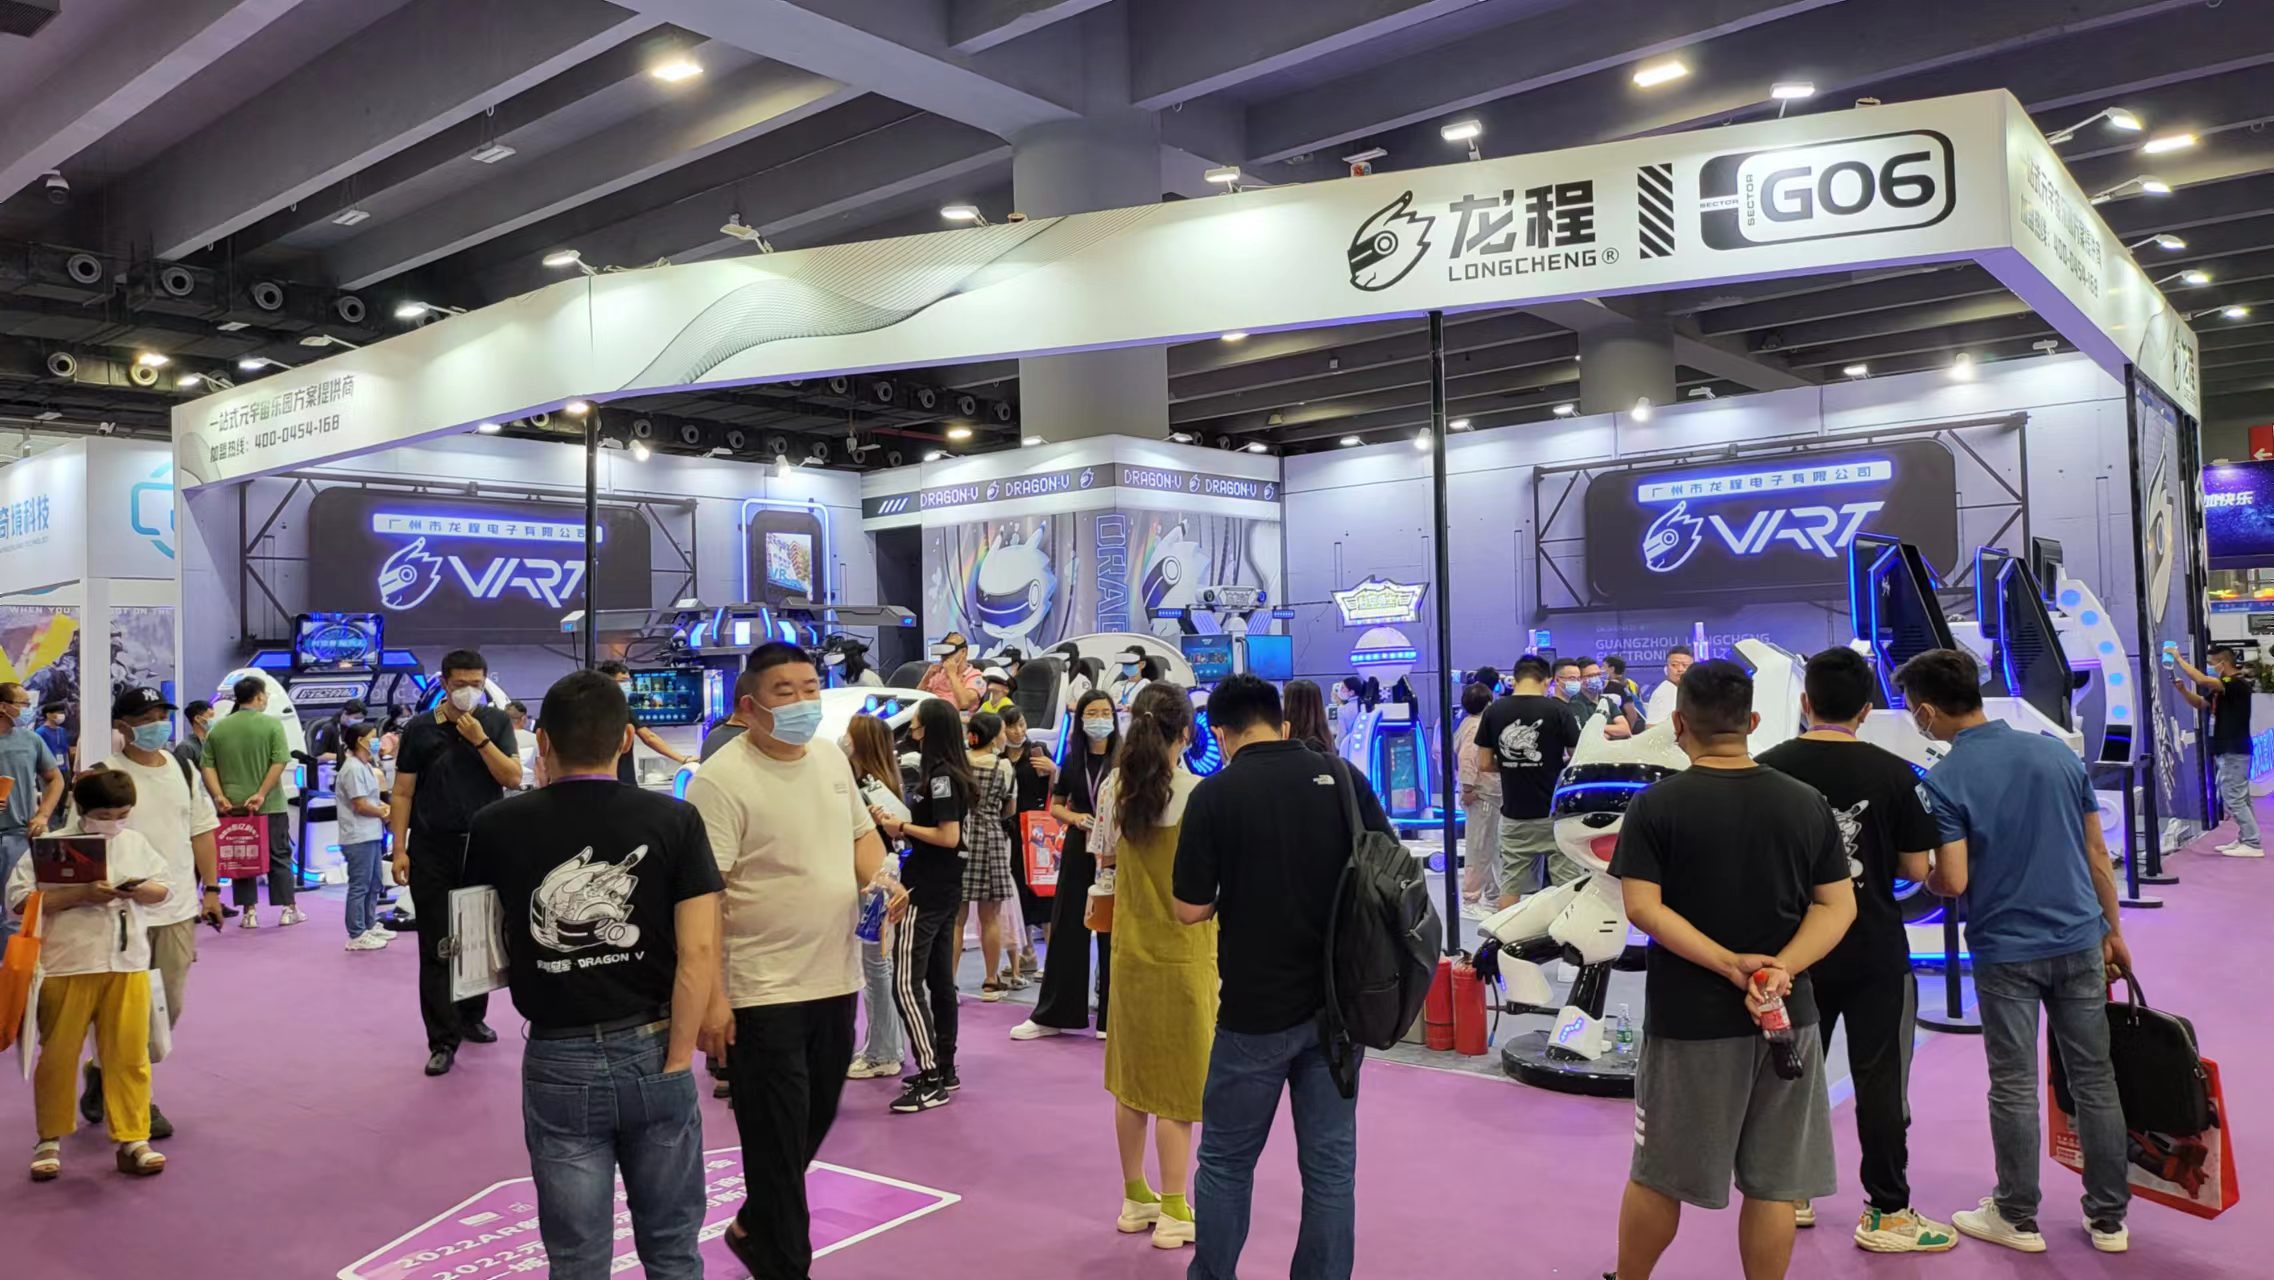 VART VR |Guangzhou Metaverse Uitstalling Stand G06 regtig gewild